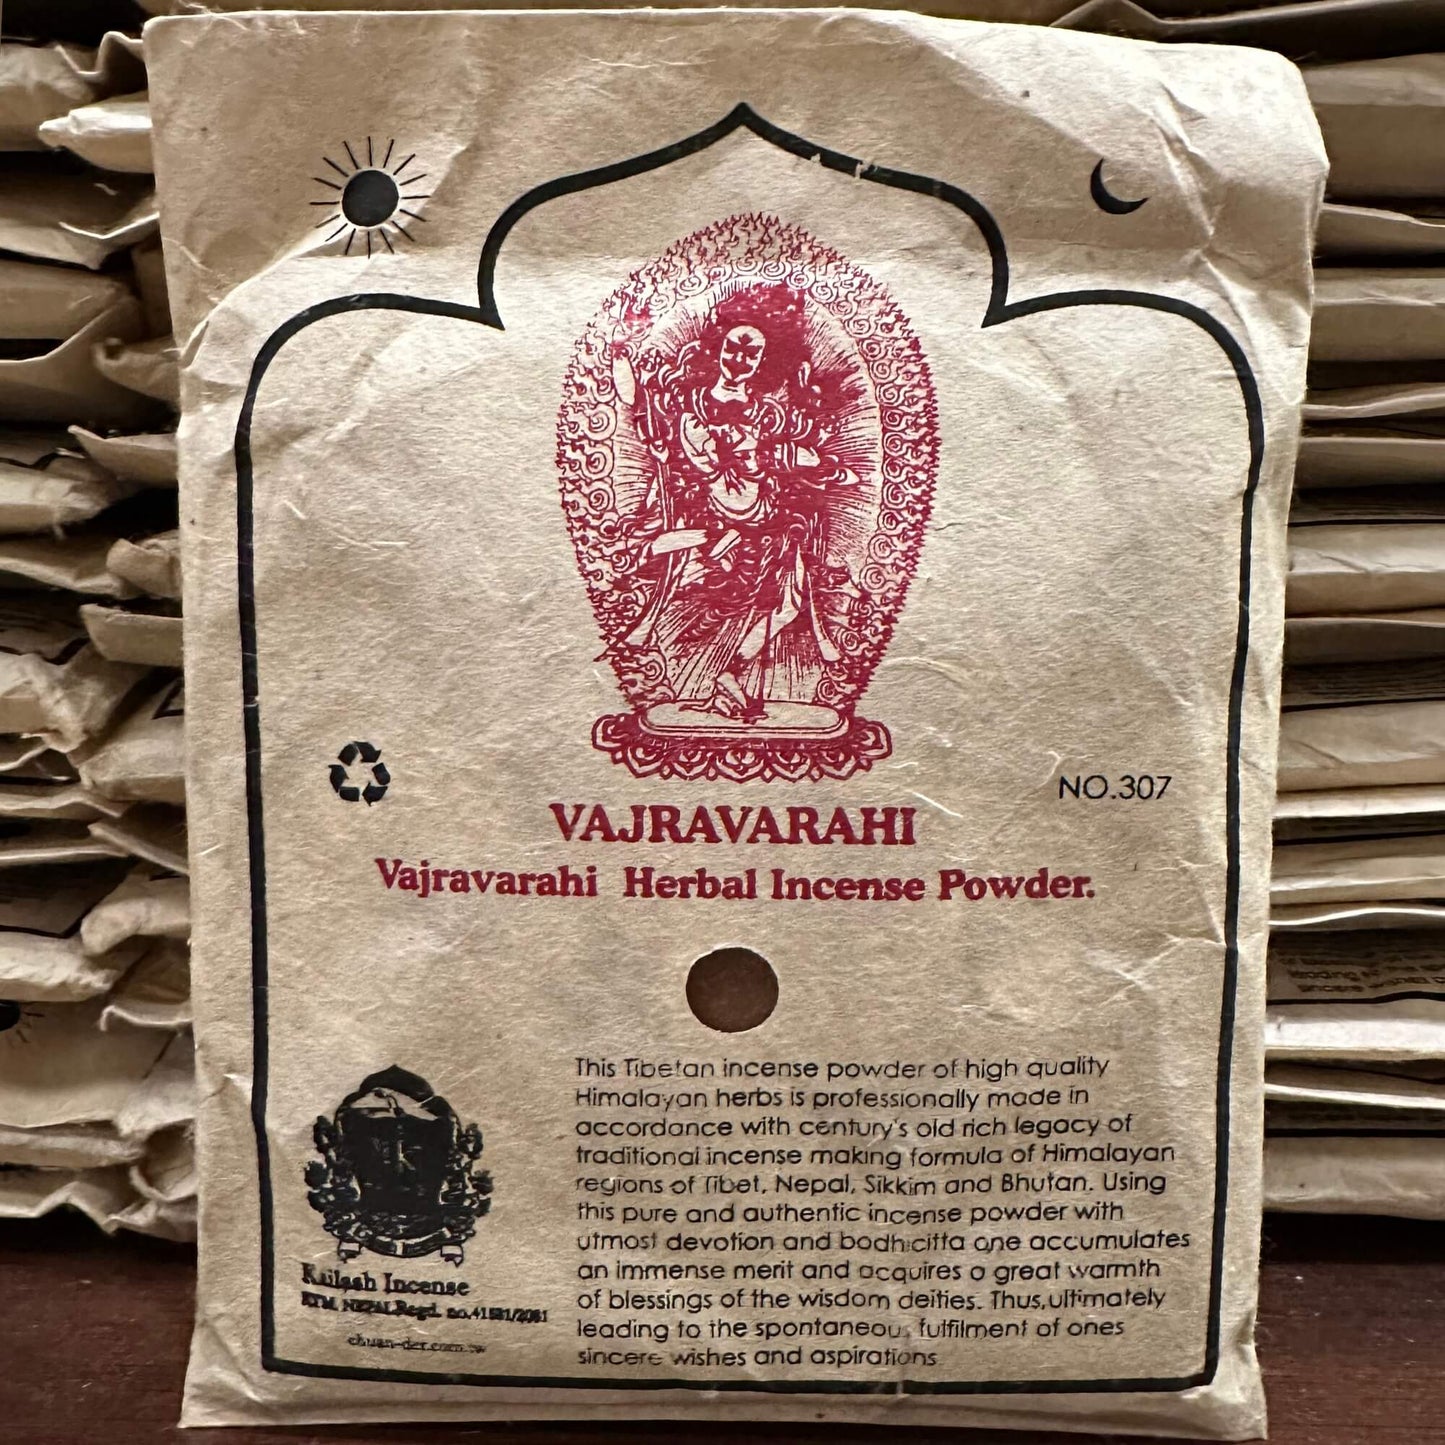 Tibetan Herbal Incense Powder